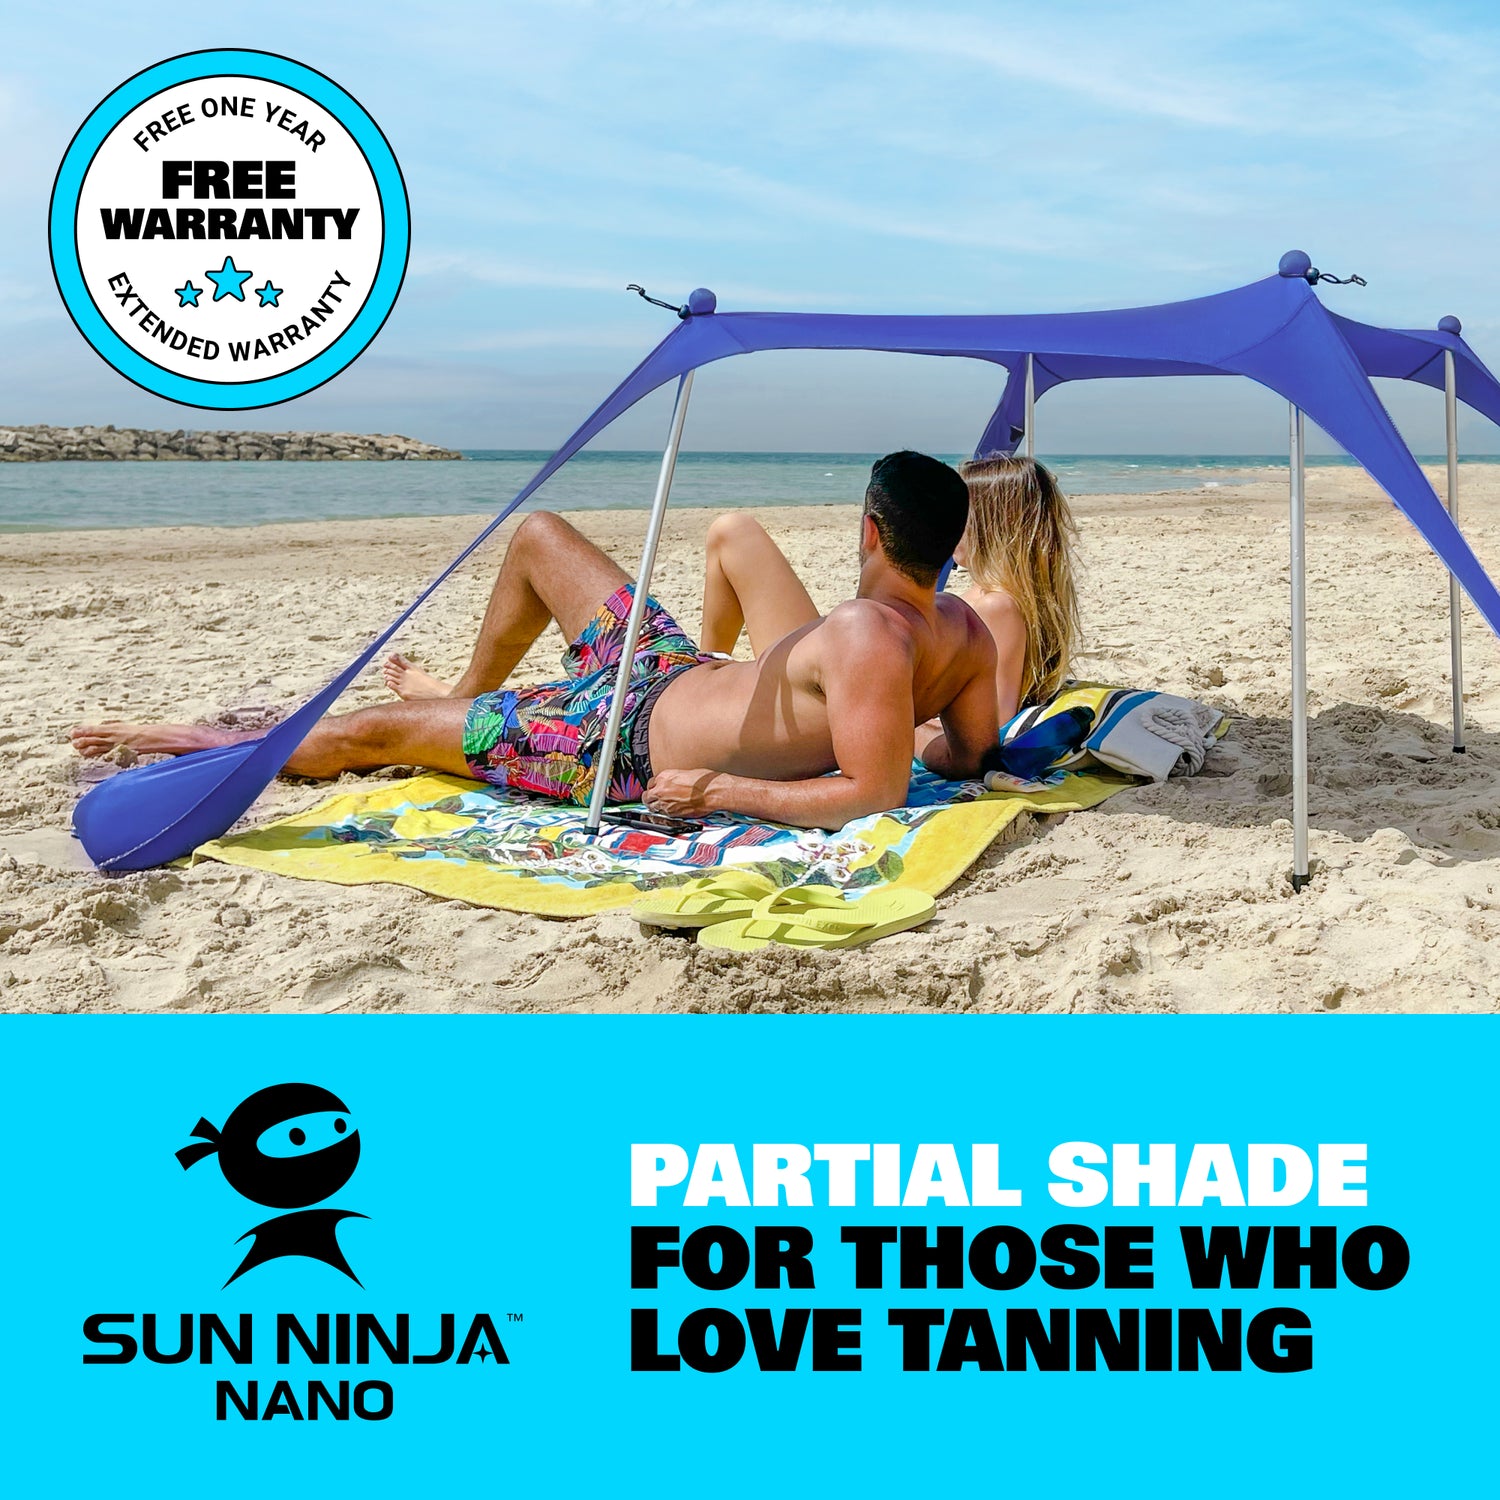 Sun Ninja Beach Tent Review - Reviewed